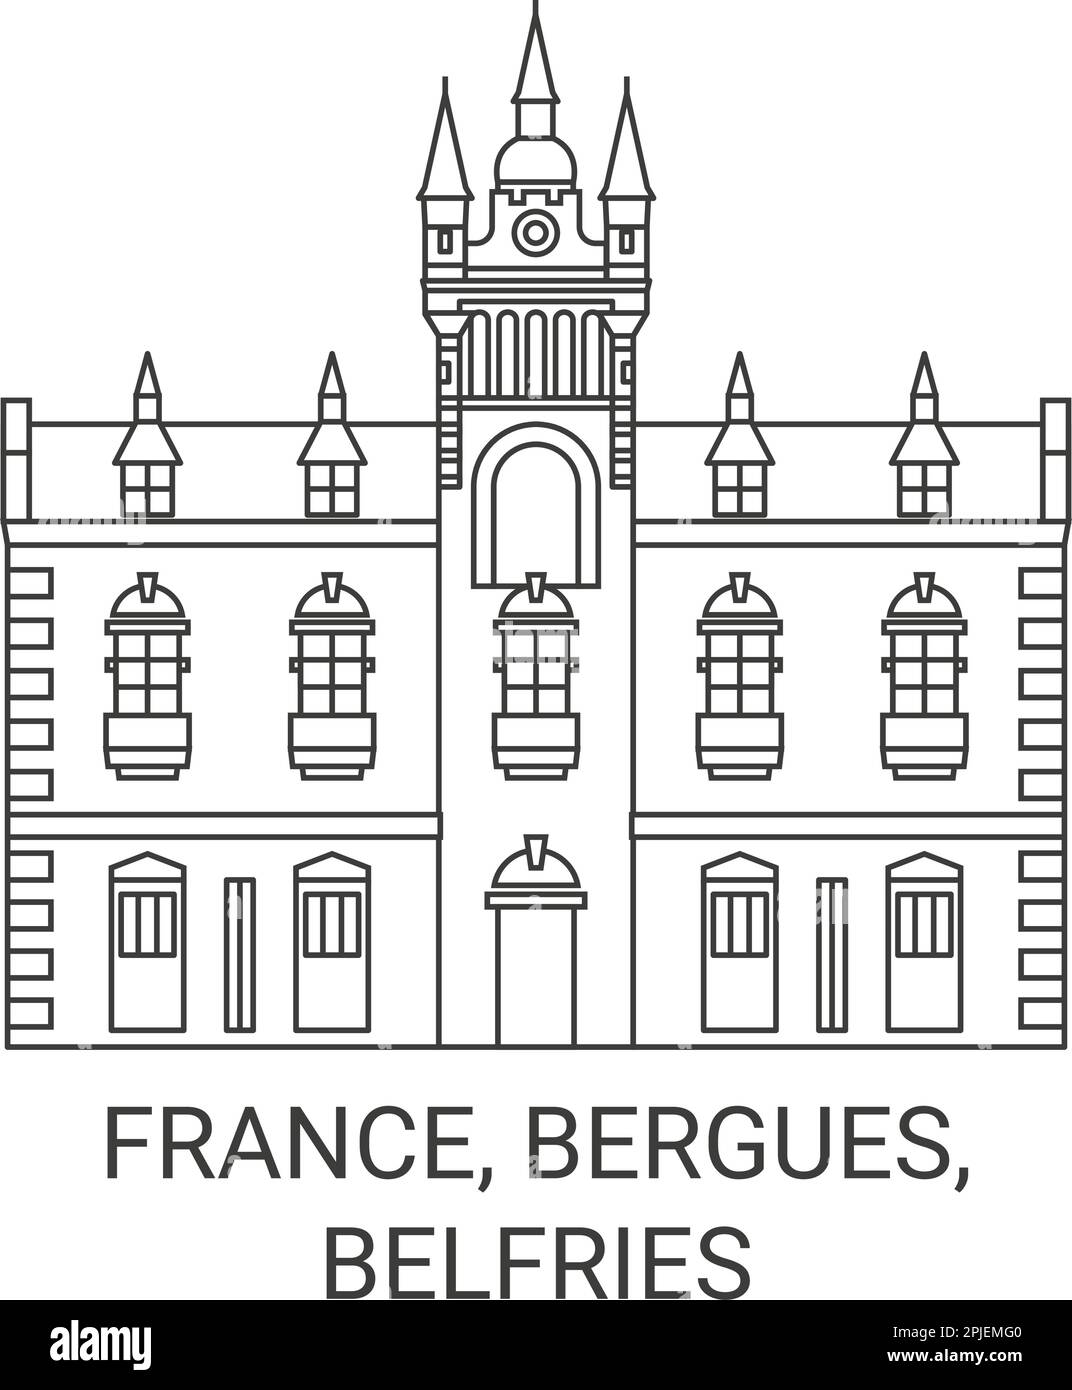 France, Bergues, Belfries, travel landmark vector illustration Stock Vector